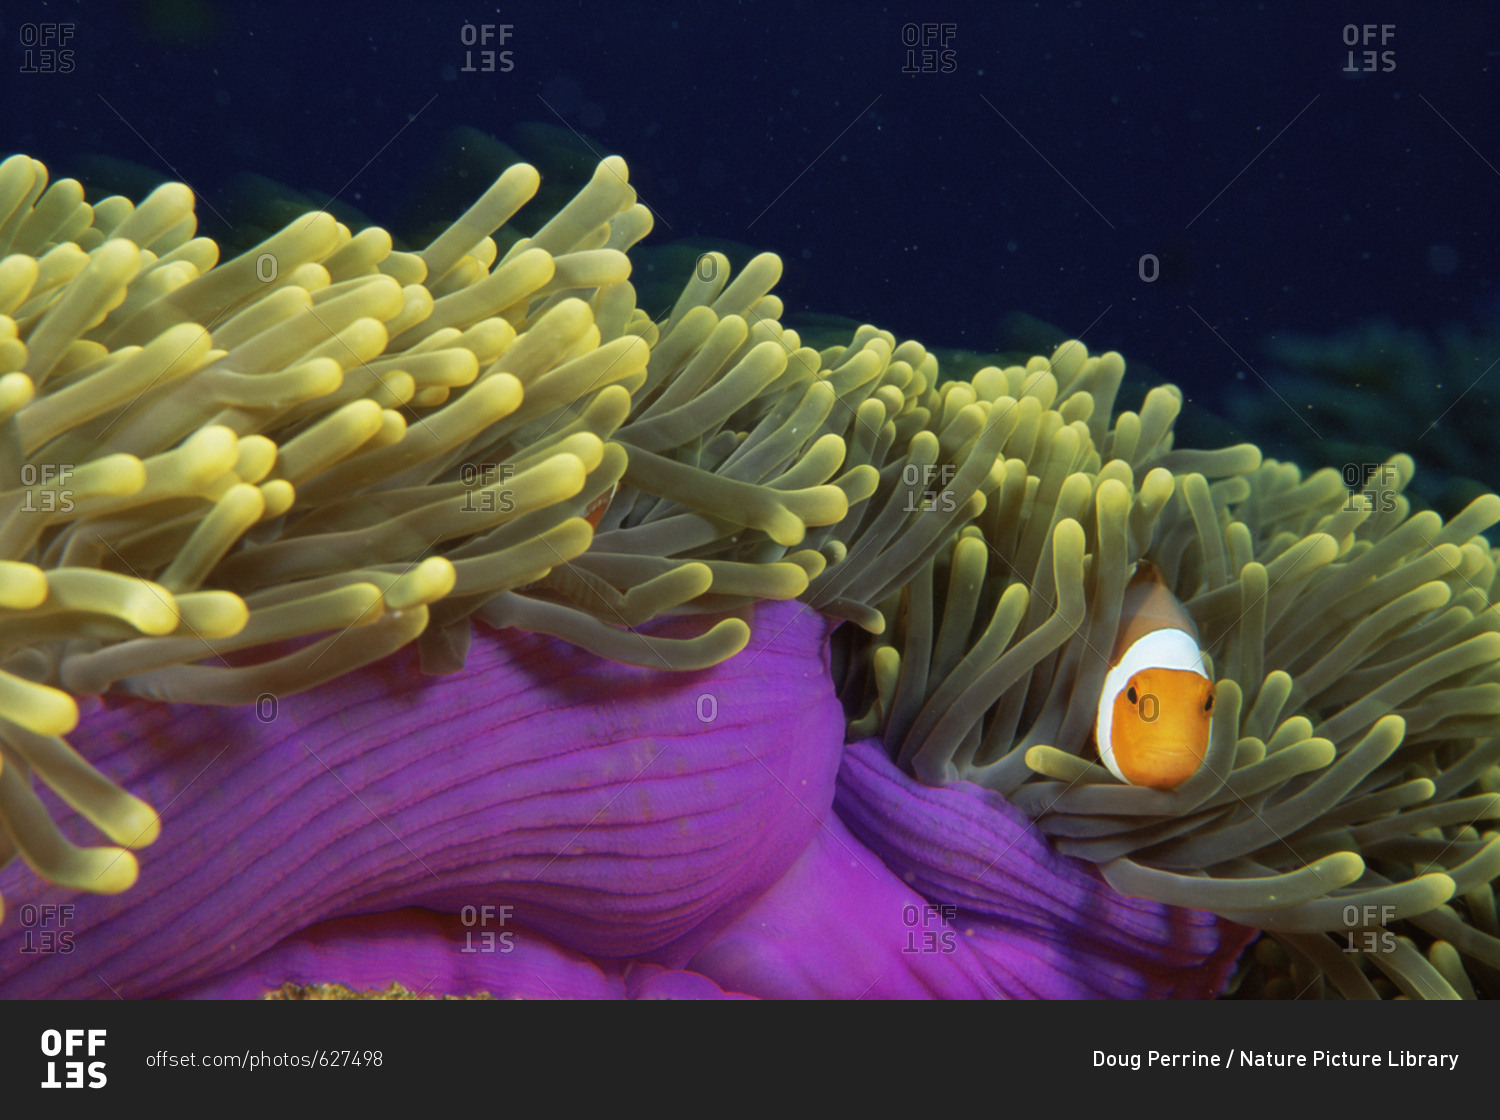 False clown fish (Amphiprion ocellaris) among tentacles of host sea anemone (Heteractis magnifica), Surin, Thailand